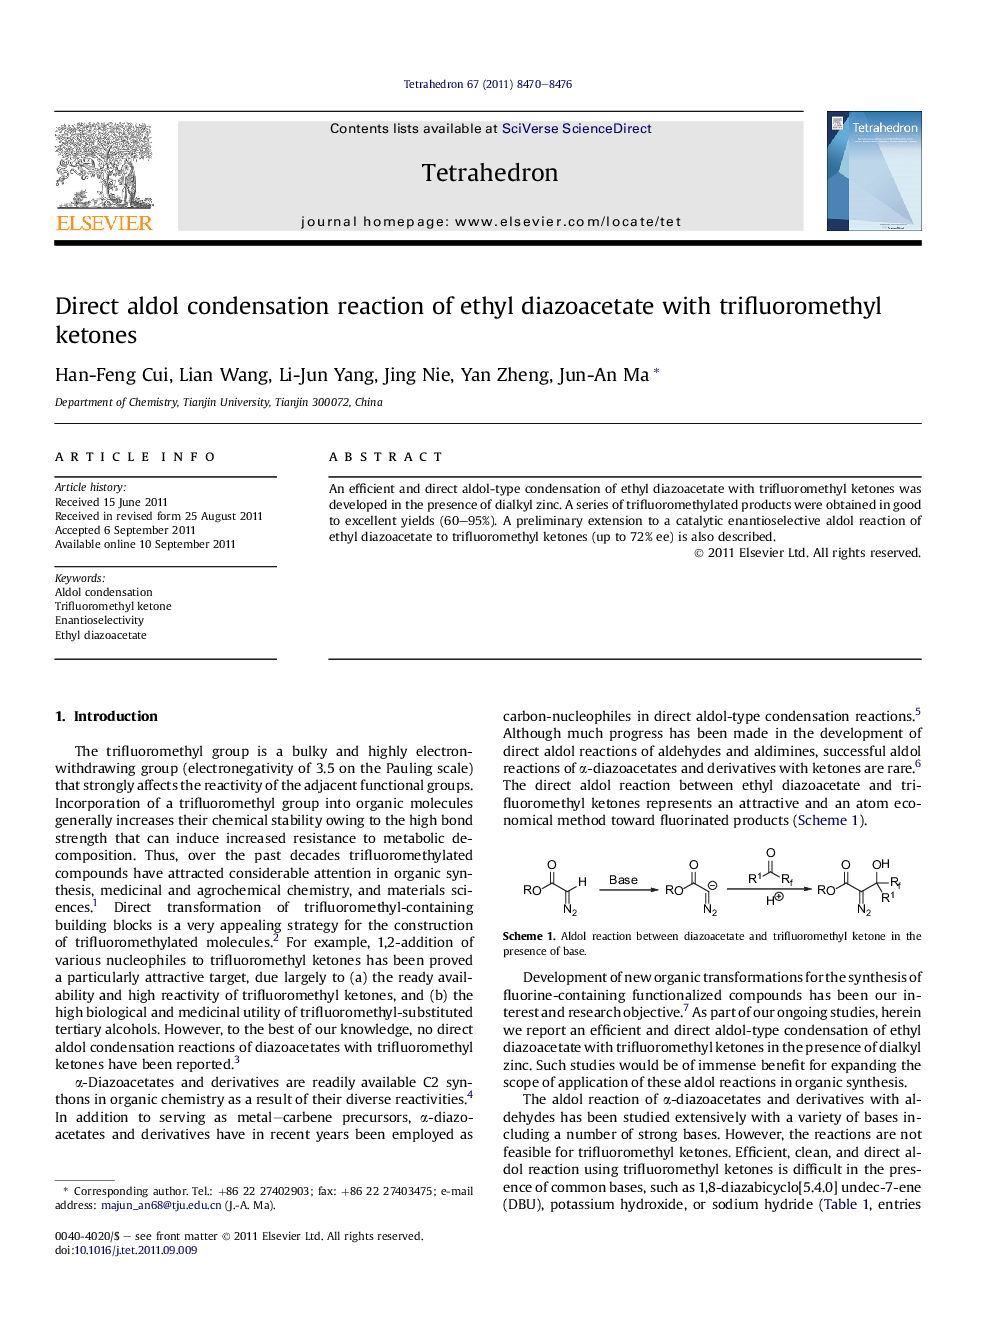 Direct aldol condensation reaction of ethyl diazoacetate with trifluoromethyl ketones